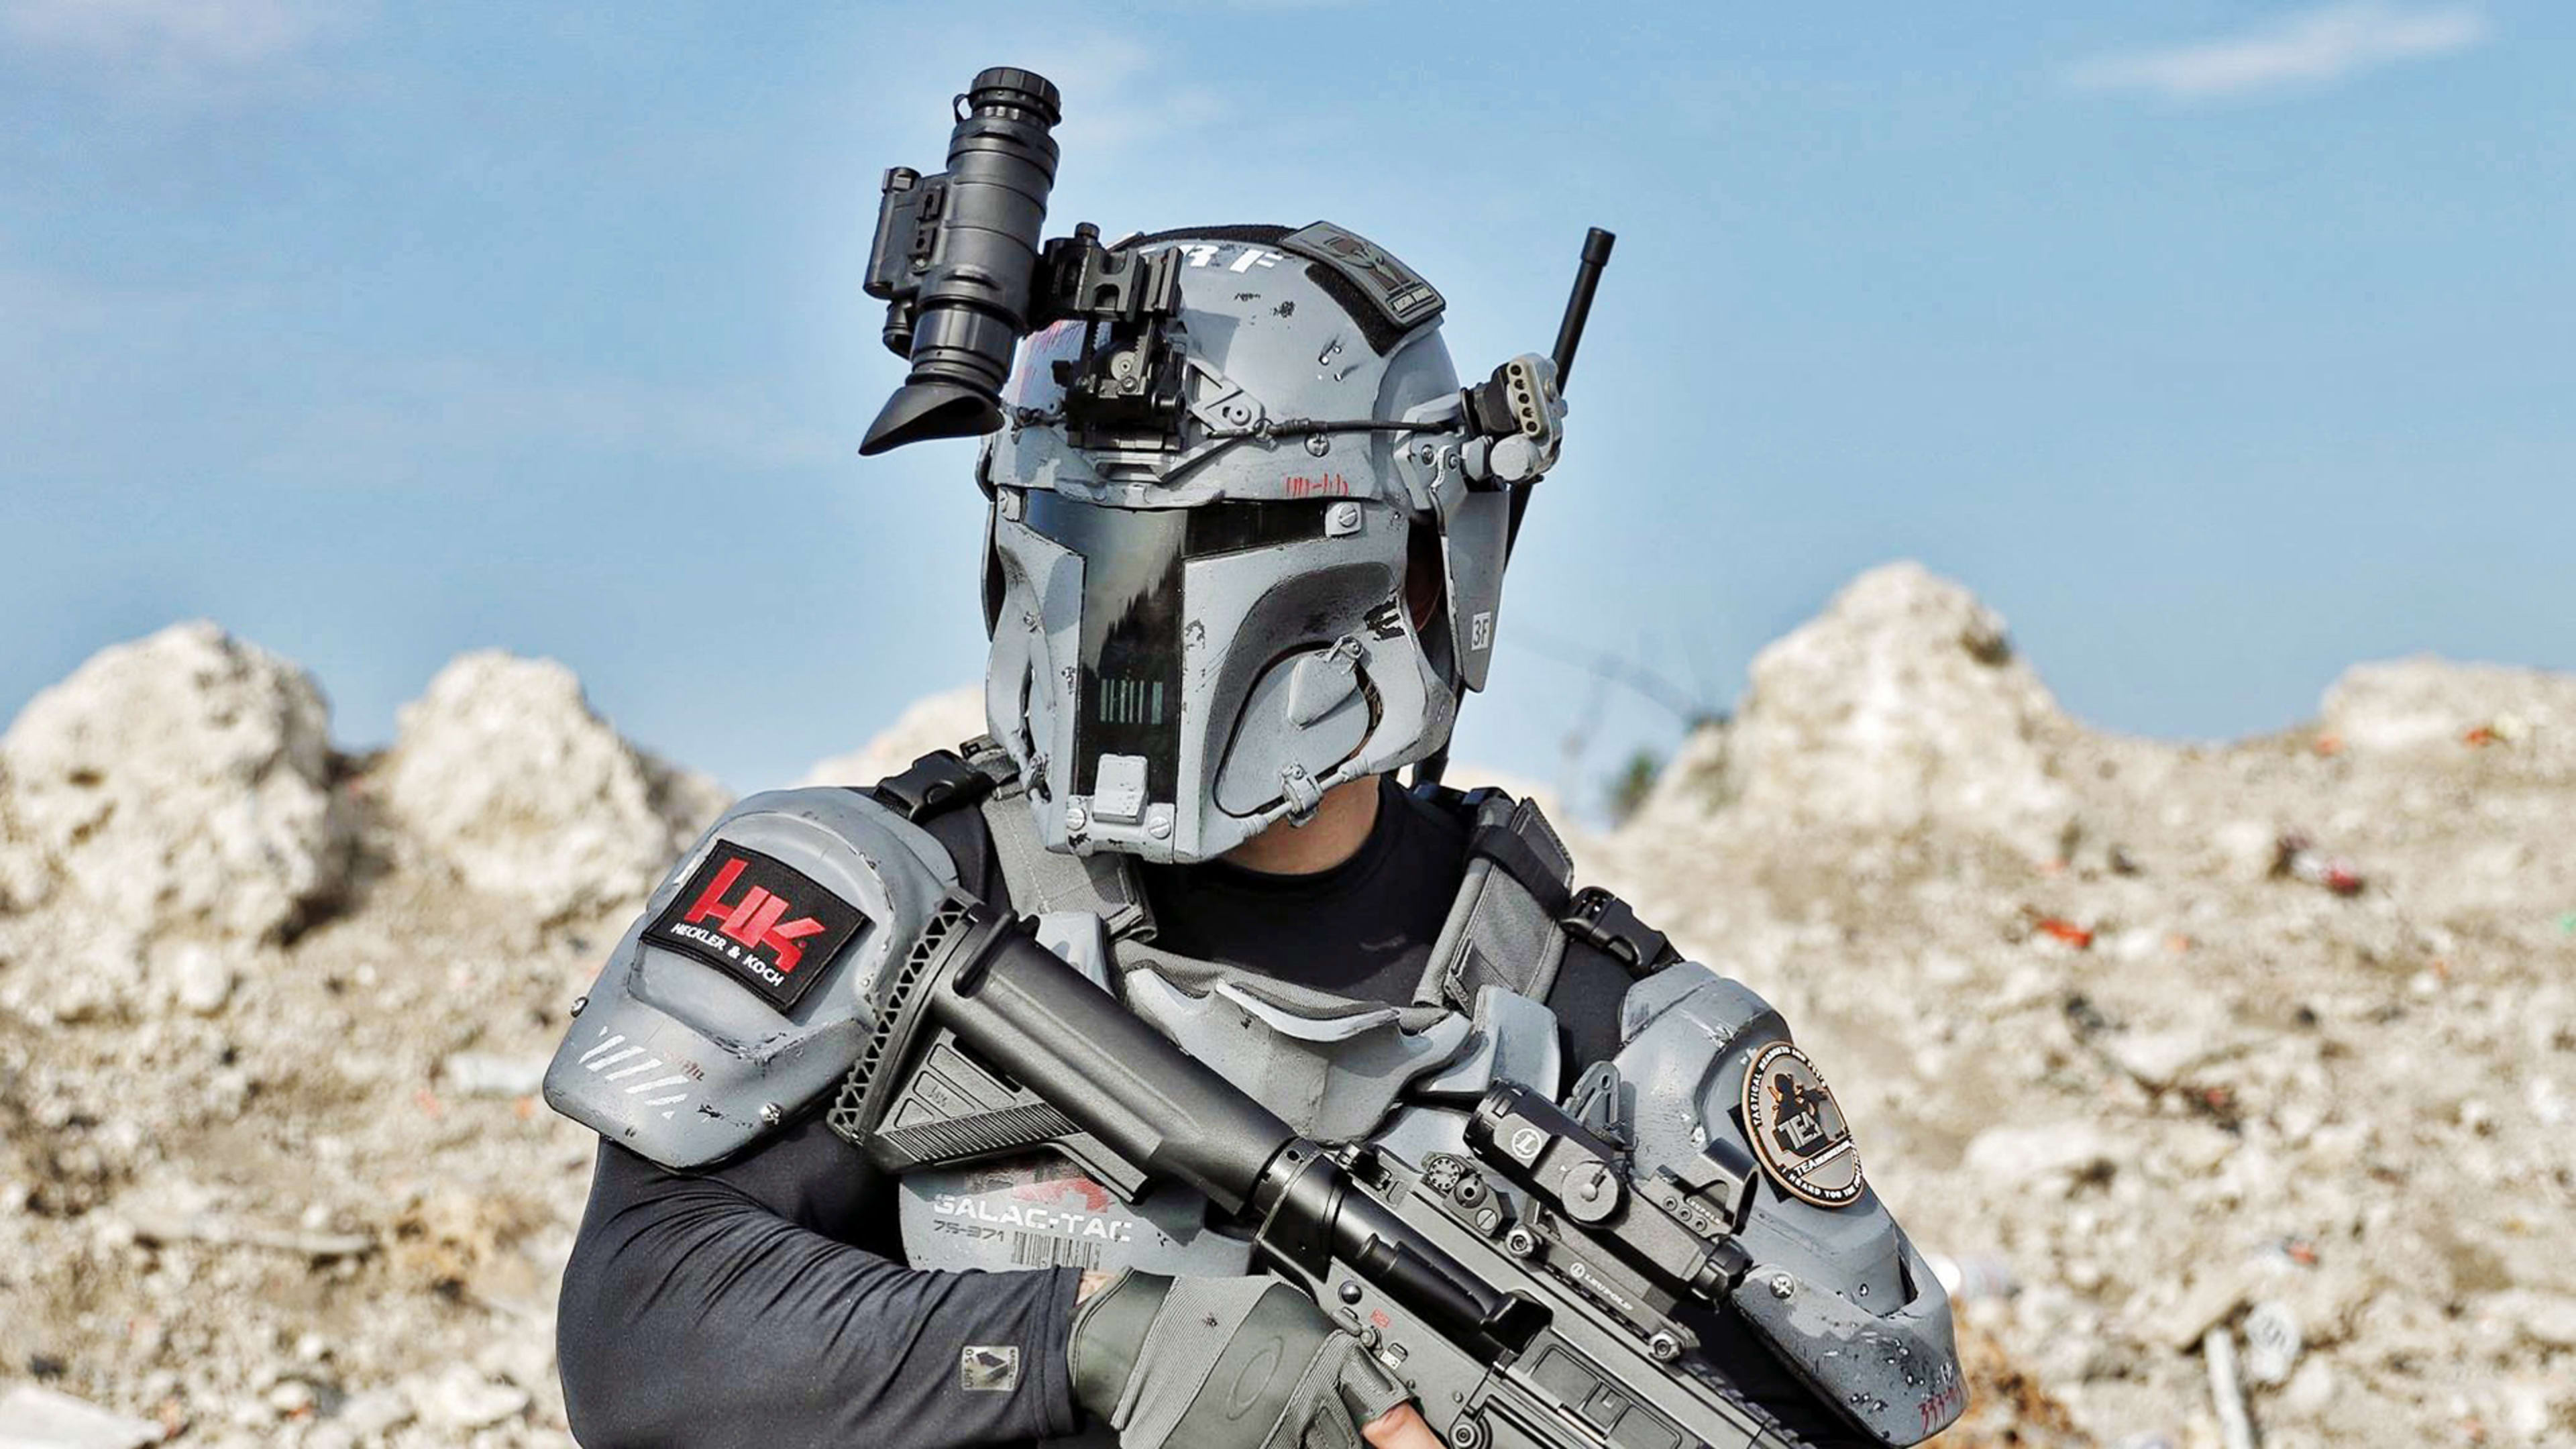 Tactical Gear Company AR500 Made Body Armor That Looks